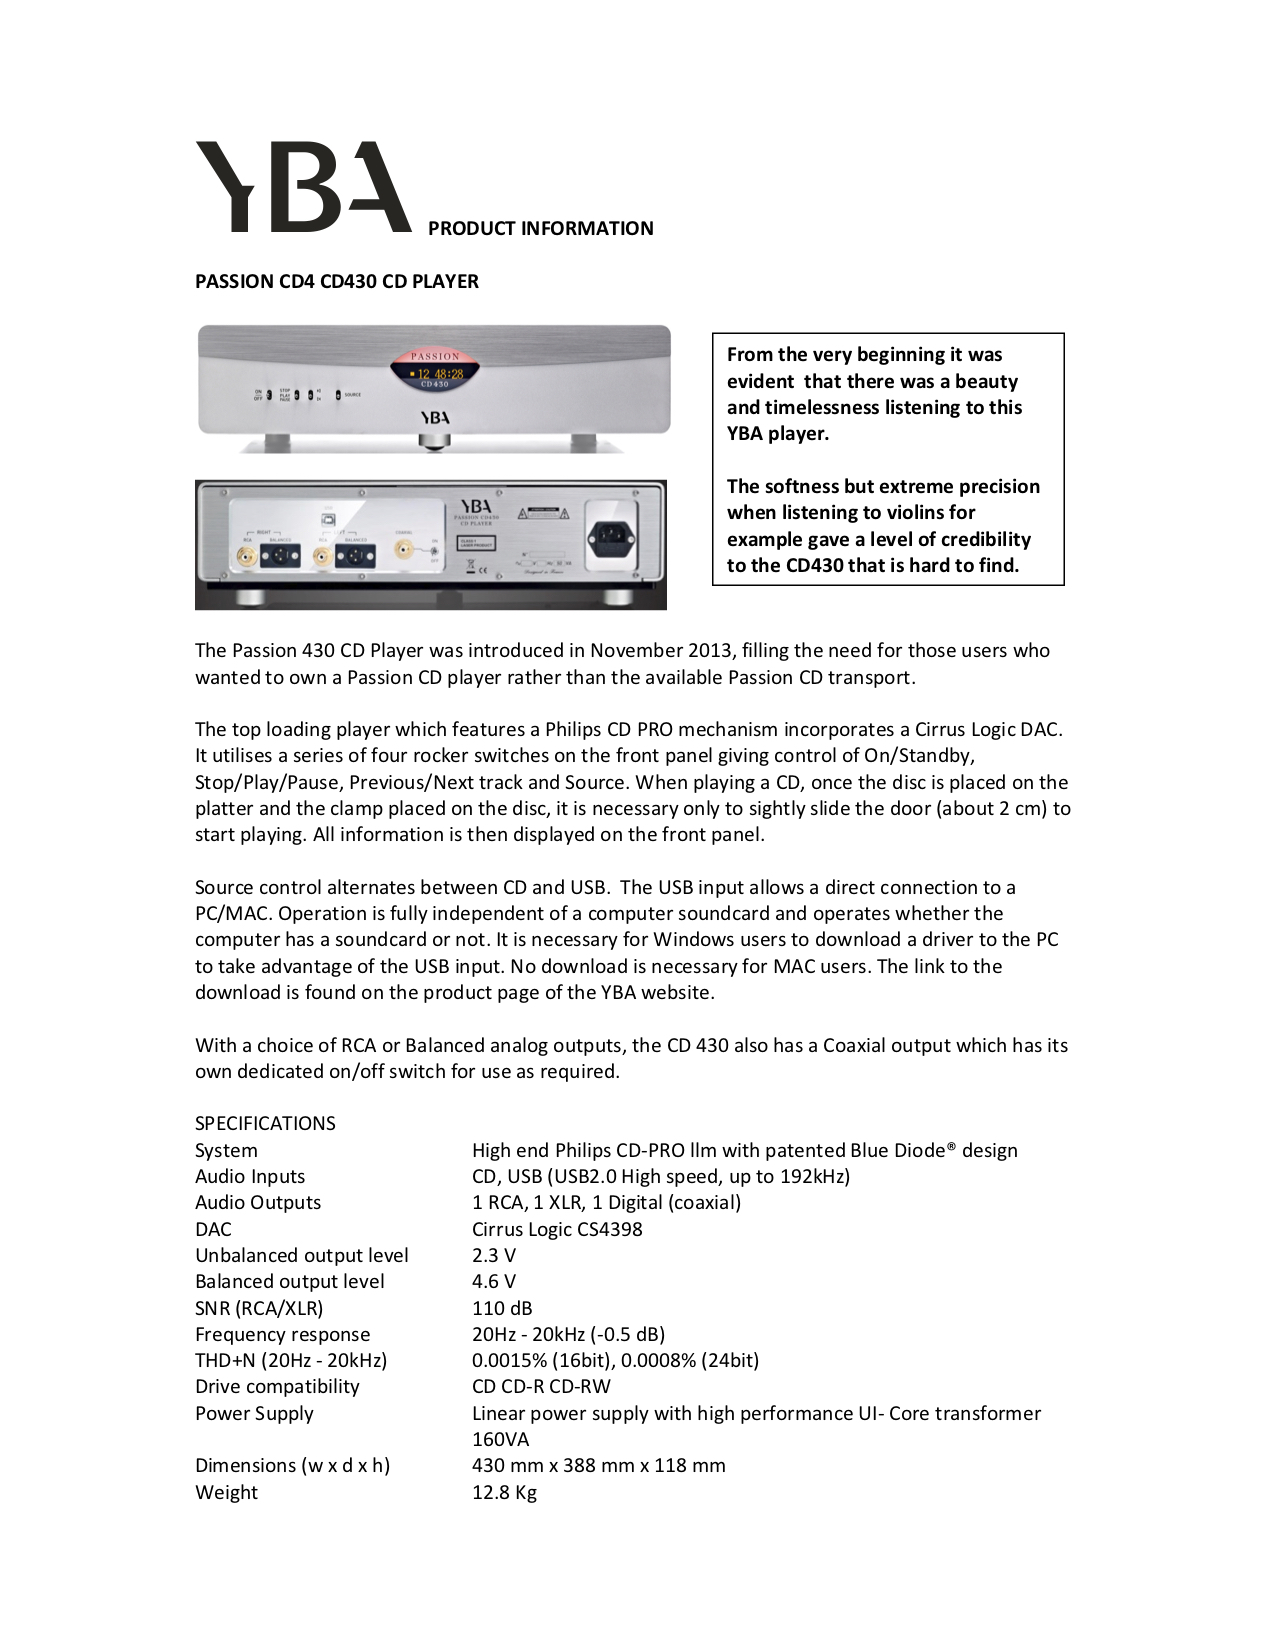 YBA Passion CD430 Info Sheet - Norman Audio